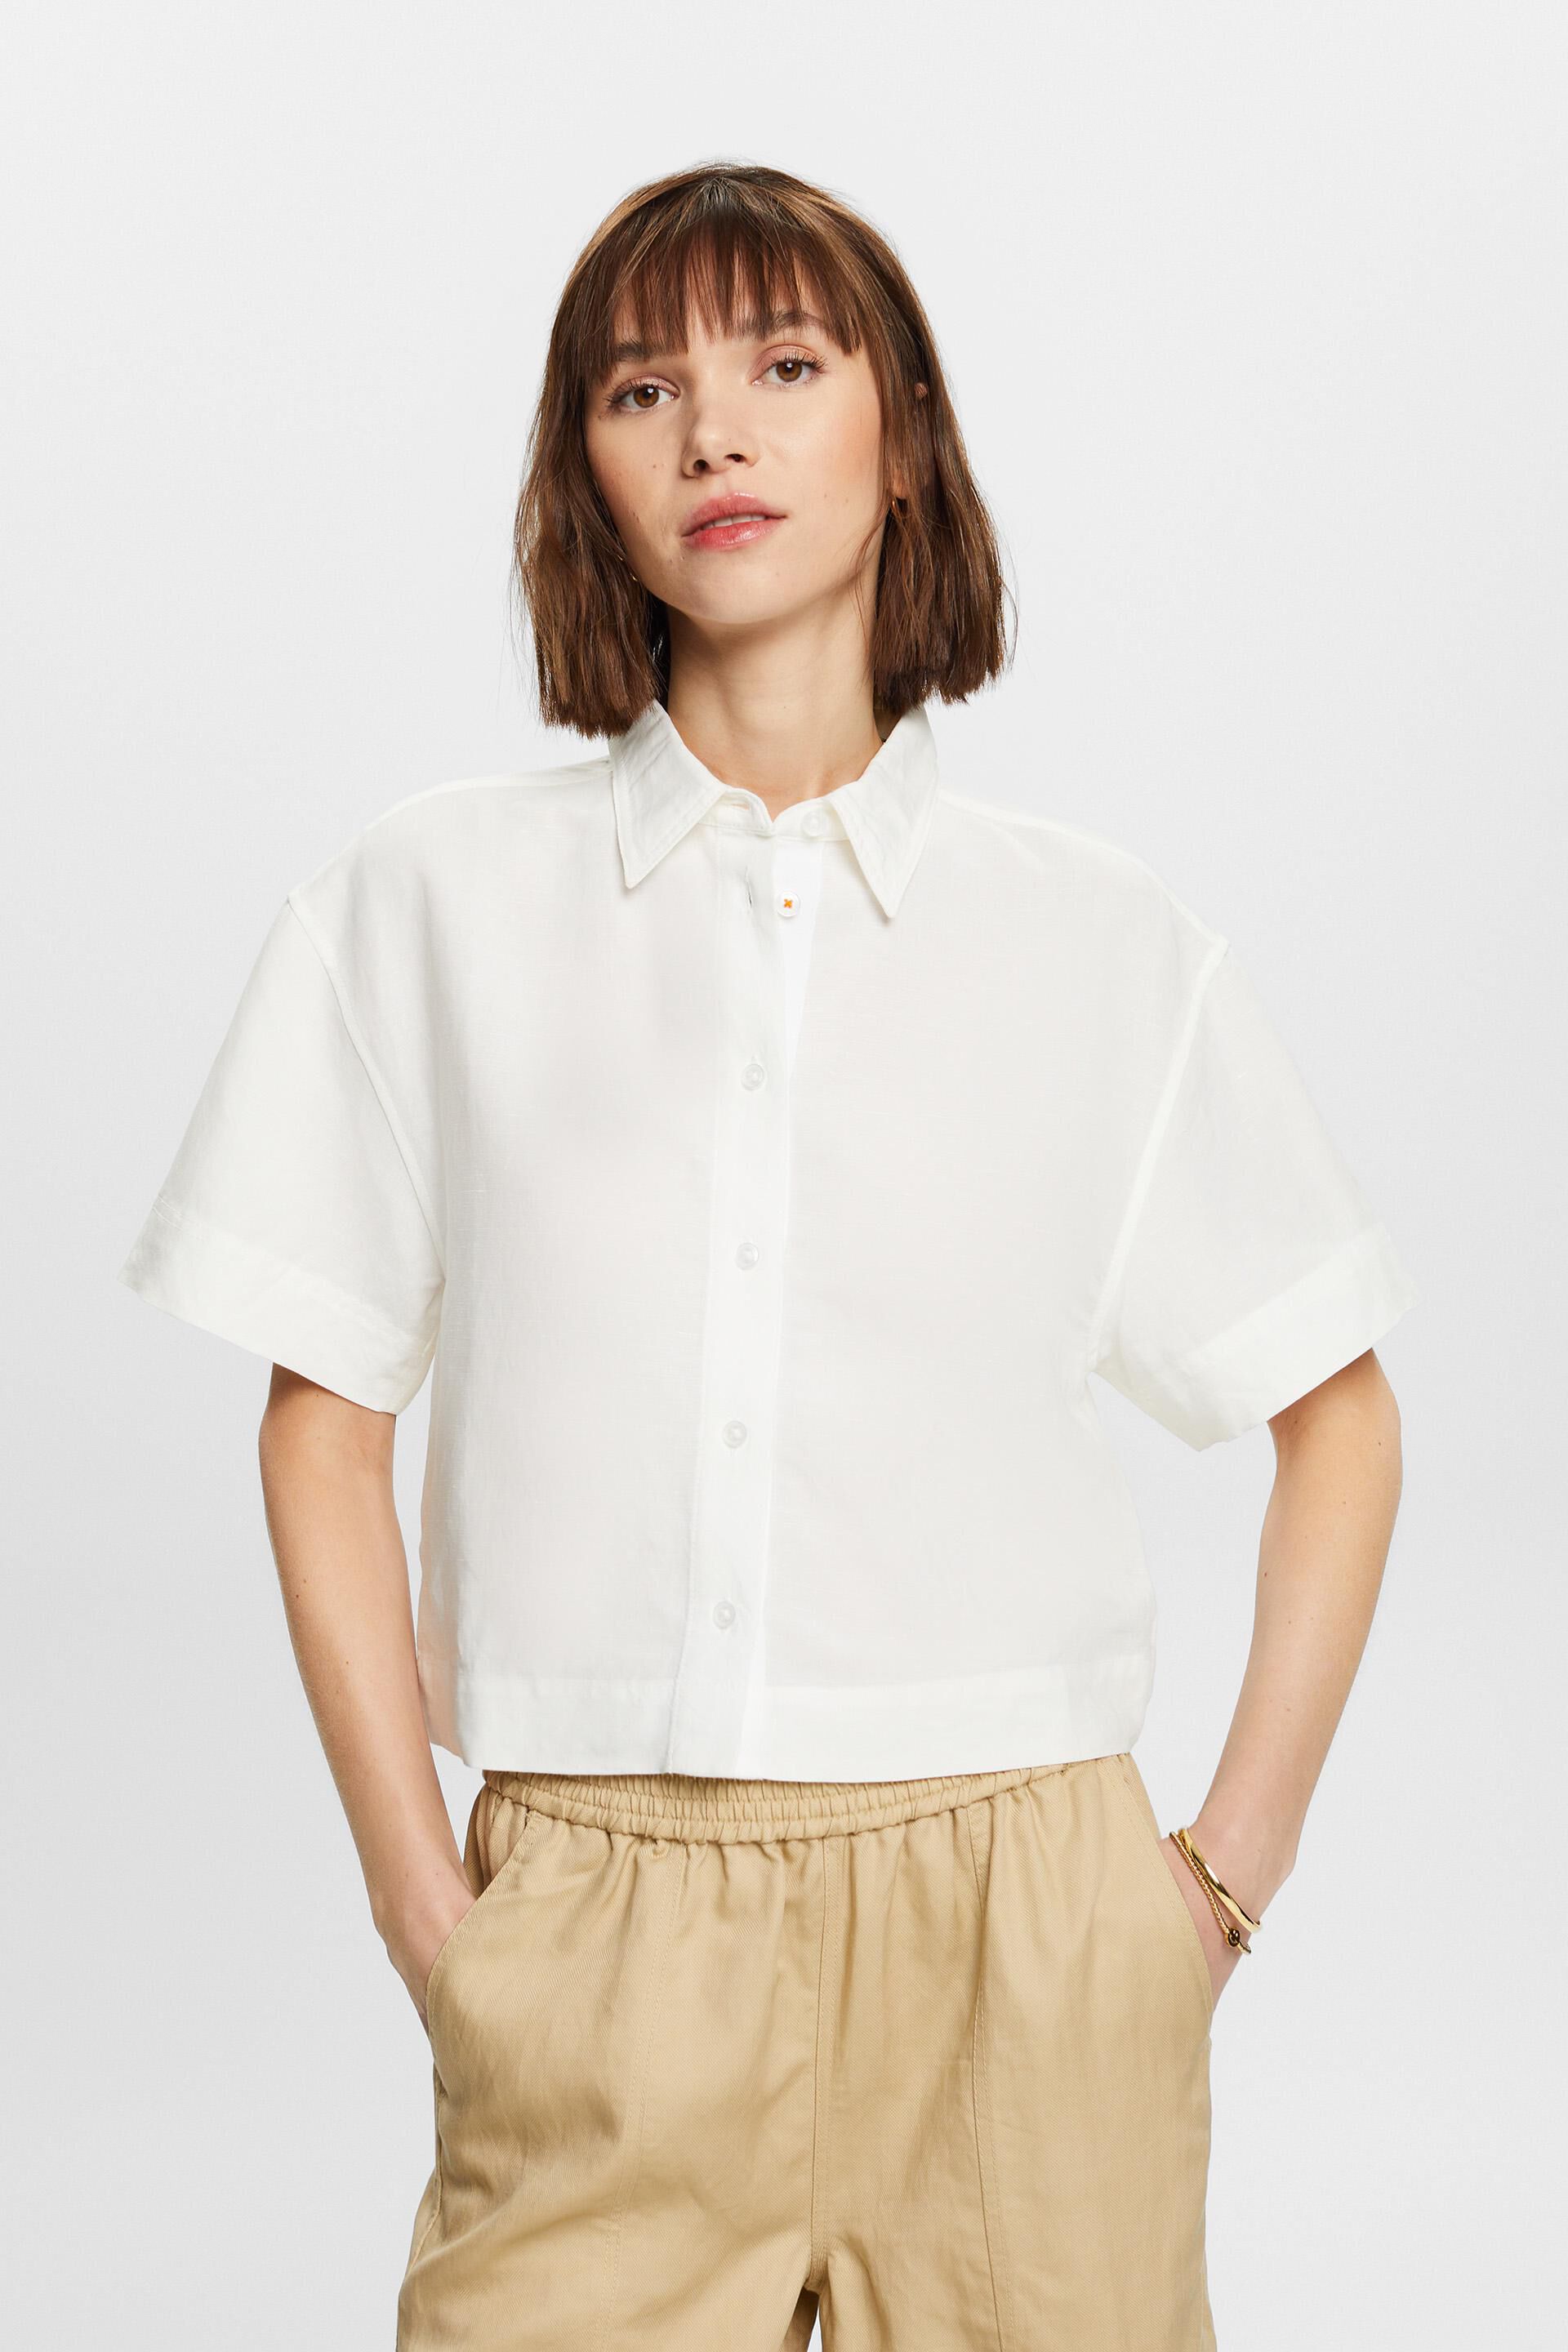 Esprit blouse, Cropped shirt linen blend